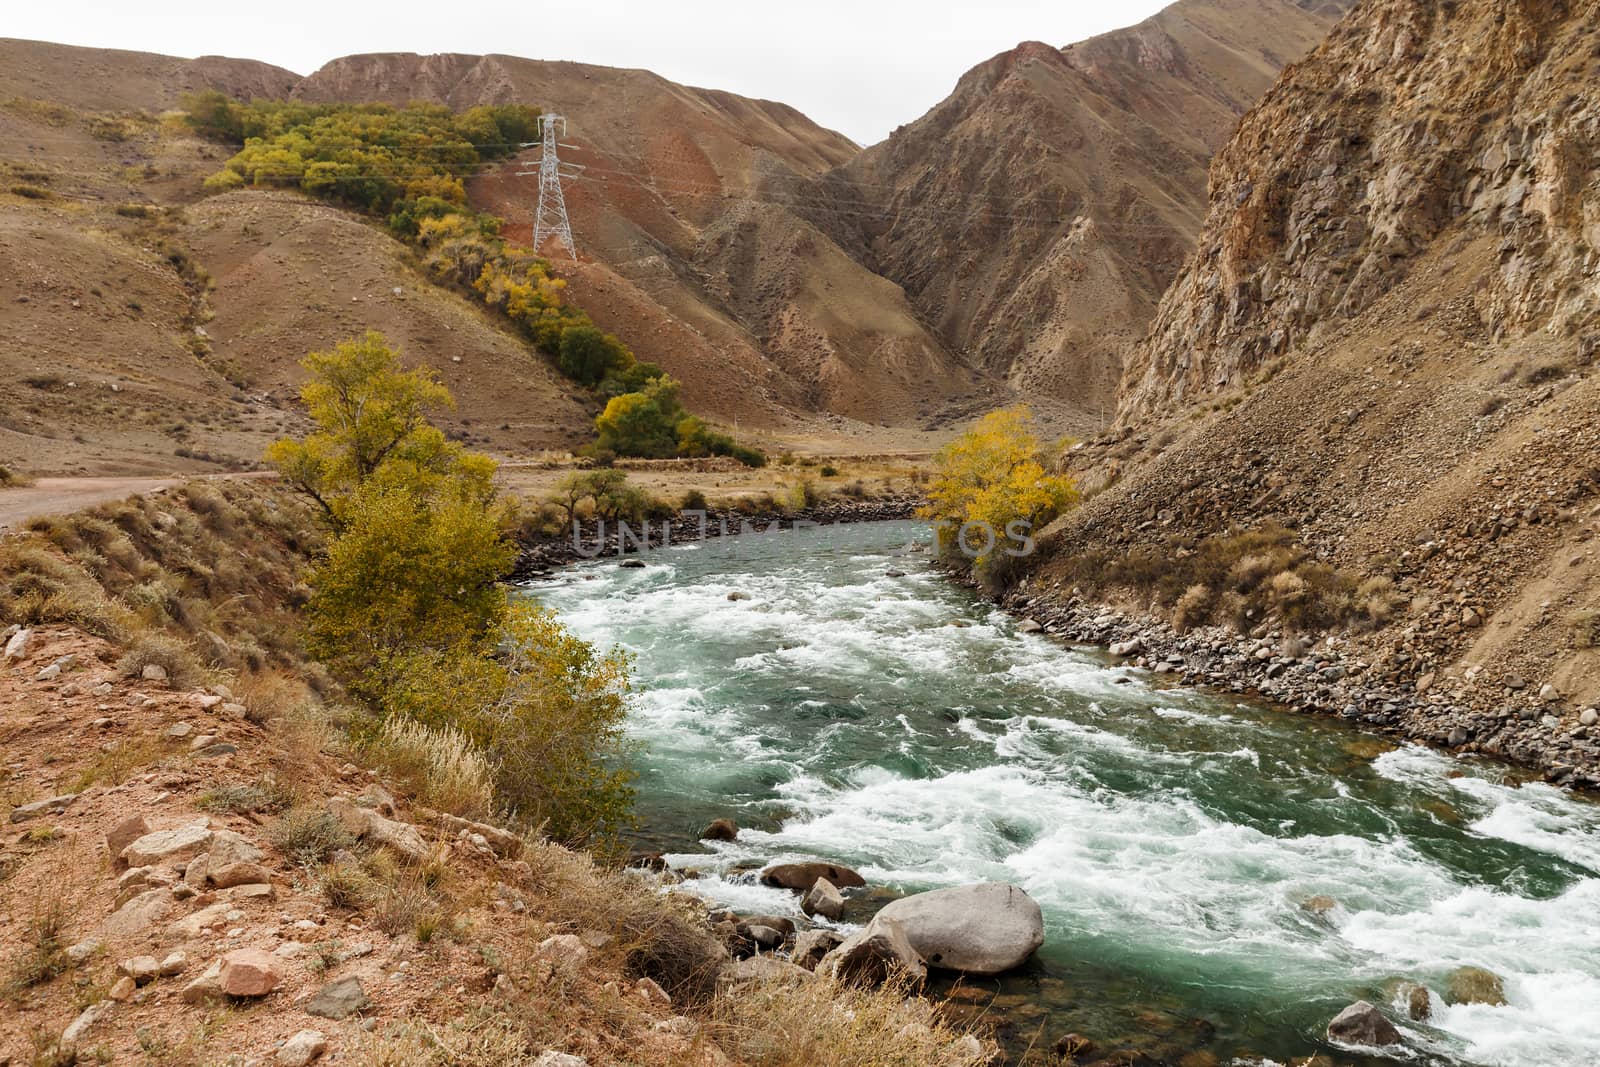 Kokemeren river, Naryn Region Kyrgyzstan, mountain river in the gorge